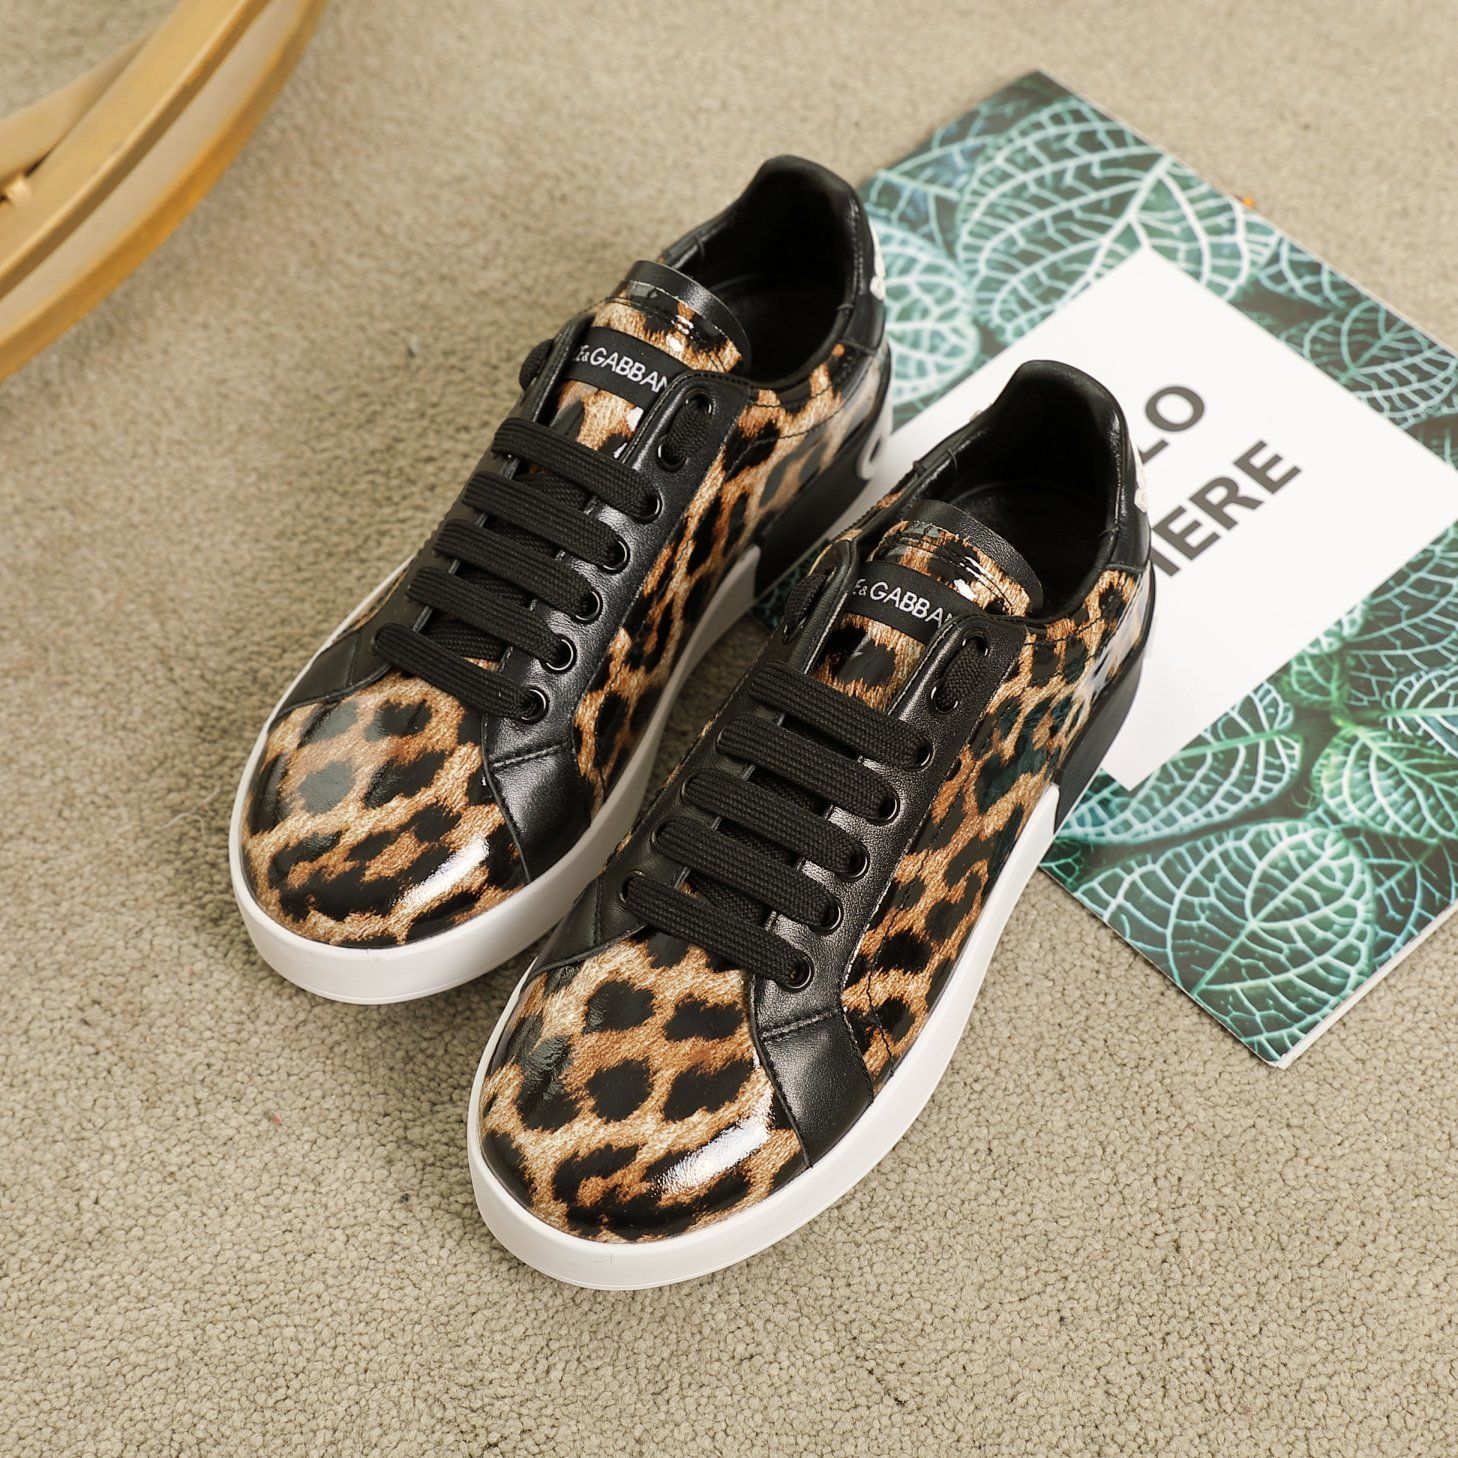 leopard print designer shoes